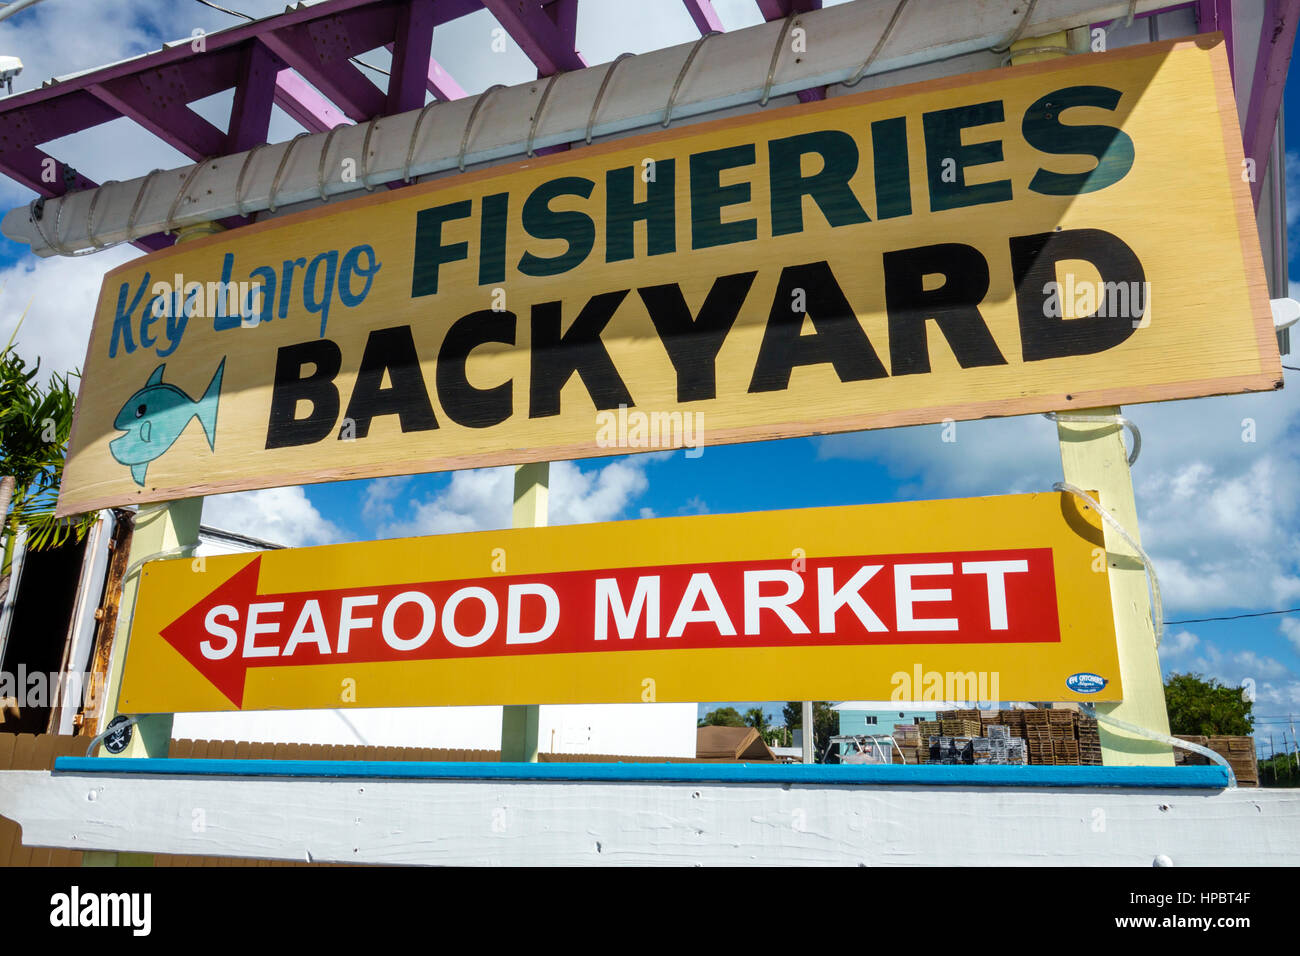 Florida Upper Key Largo Florida Keys,Key Largo Fisheries Backyard,restaurant restaurants food dining cafe cafes,seafood market,sign,FL161223050 Stock Photo